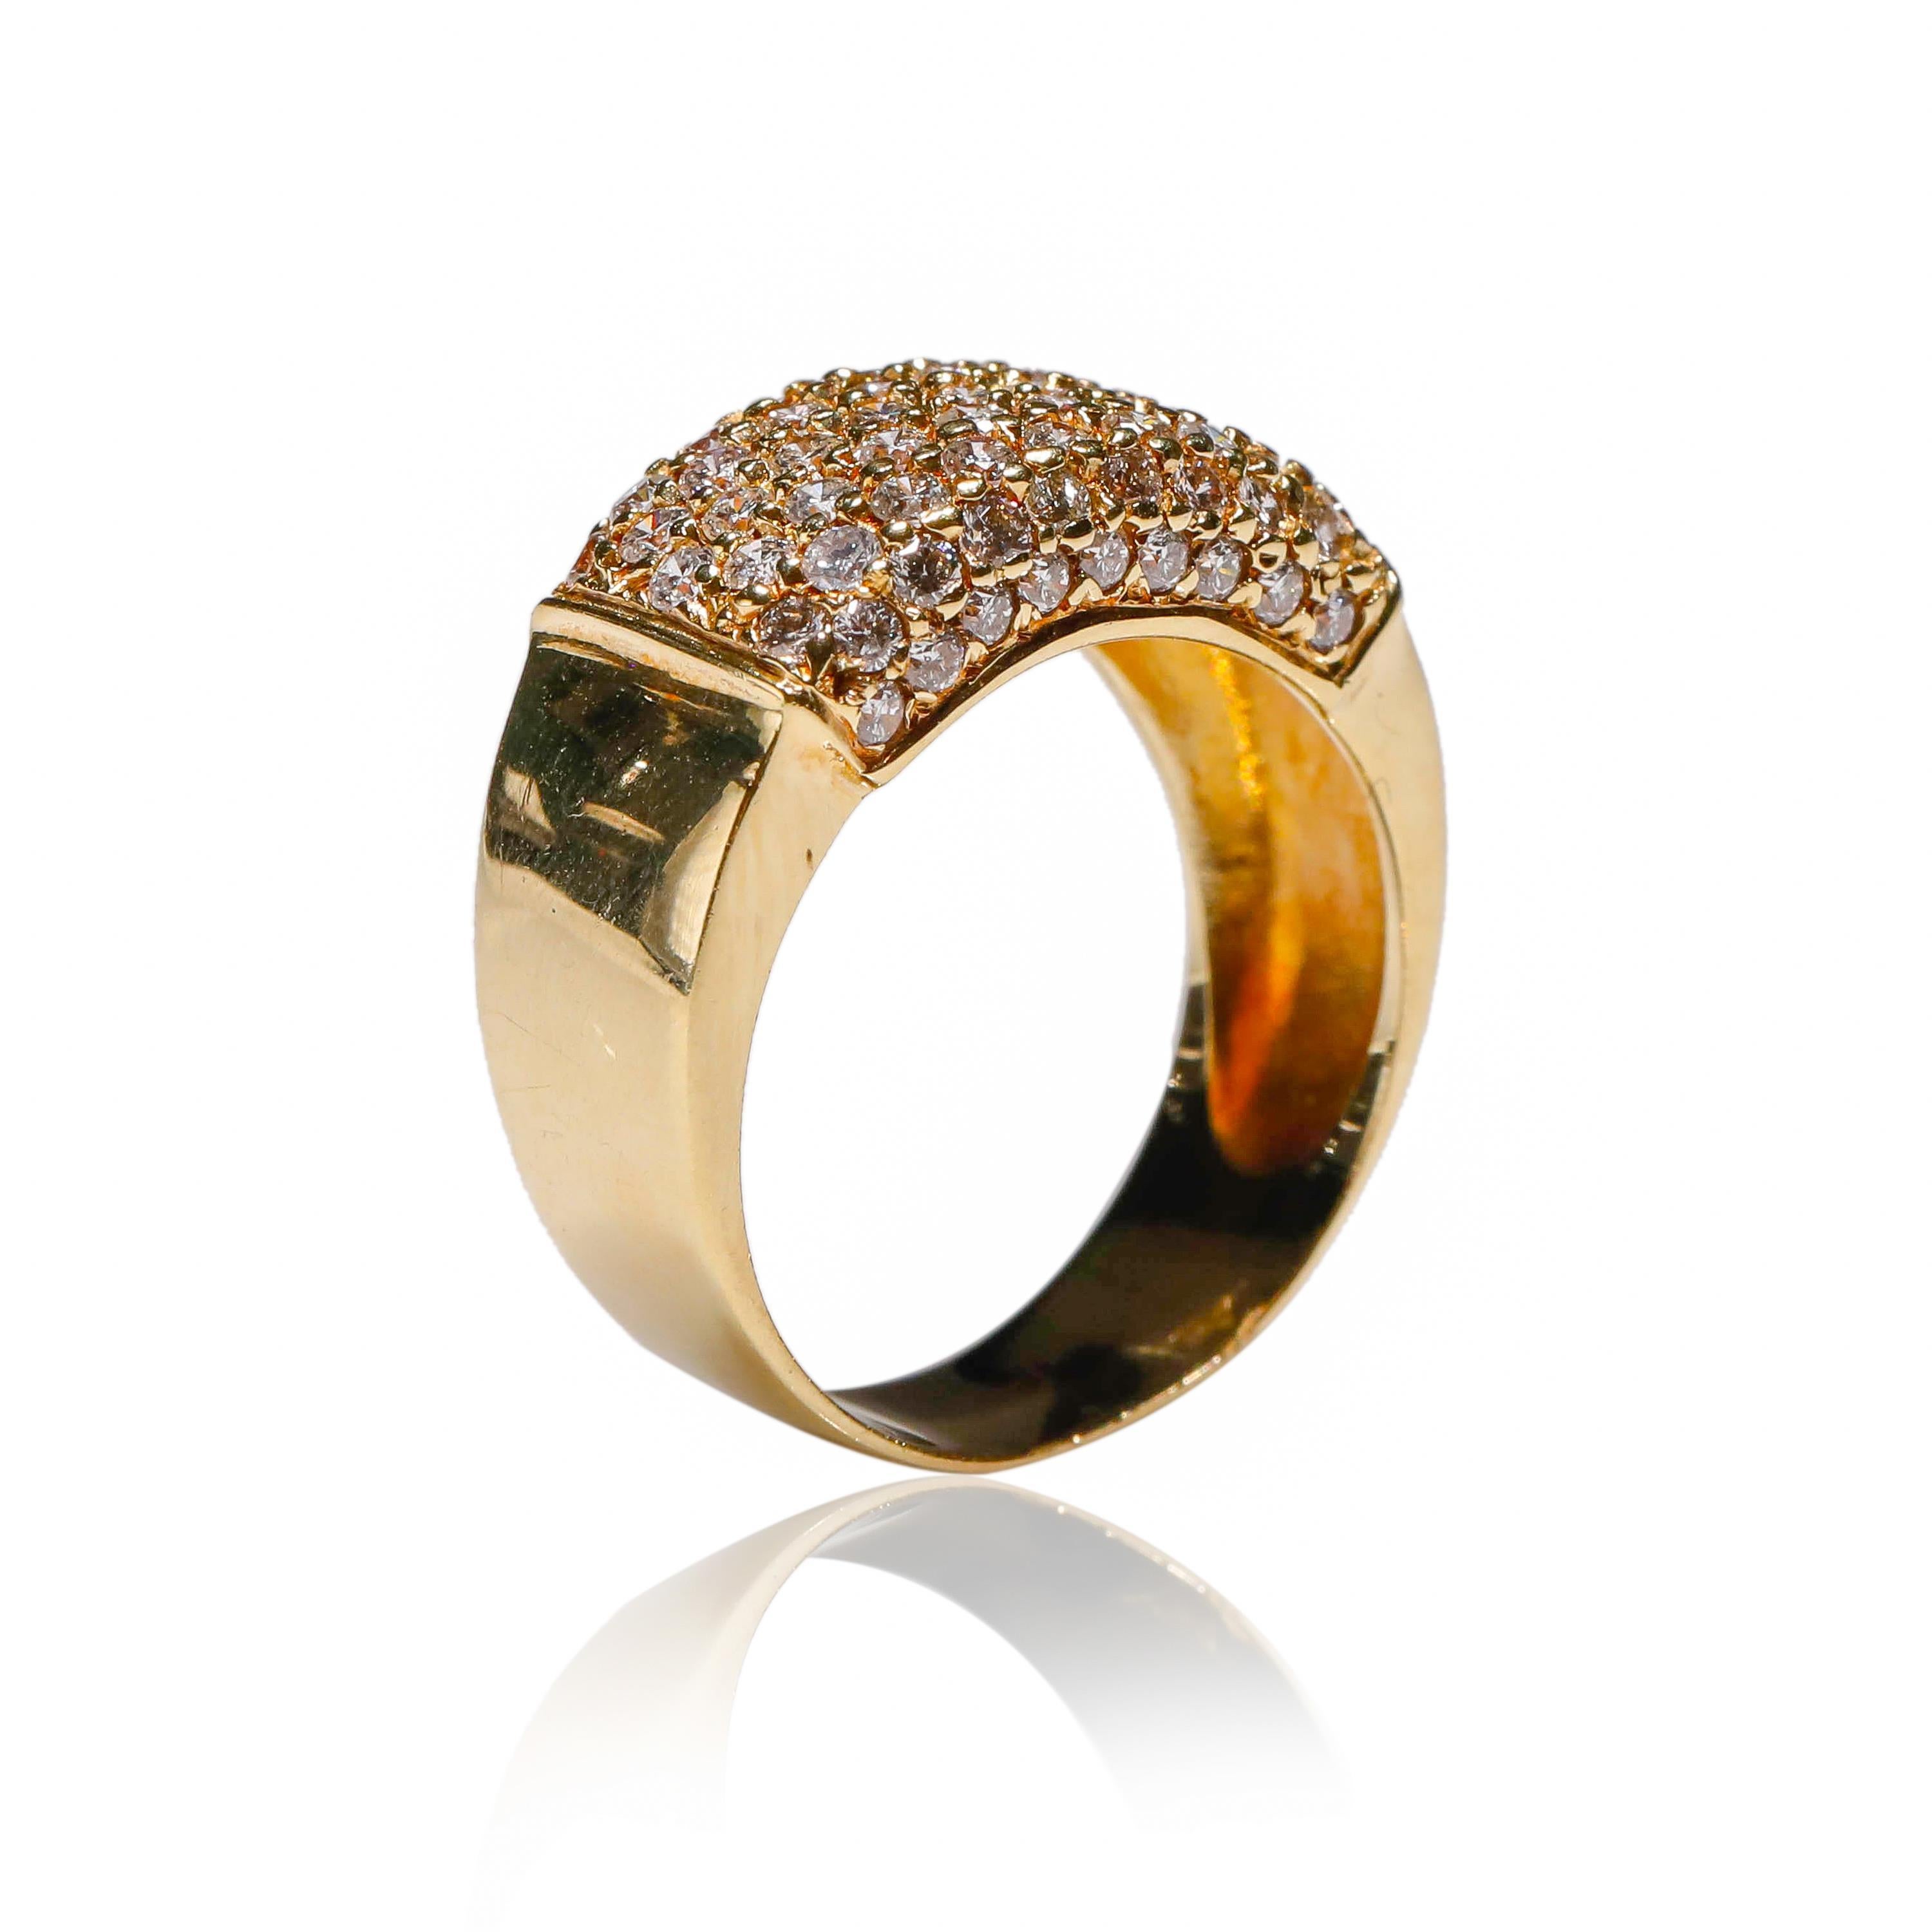 Modern 14 Karat Yellow Gold 1.54 Carat Round Cut Pave Diamond Eternity Band Ring